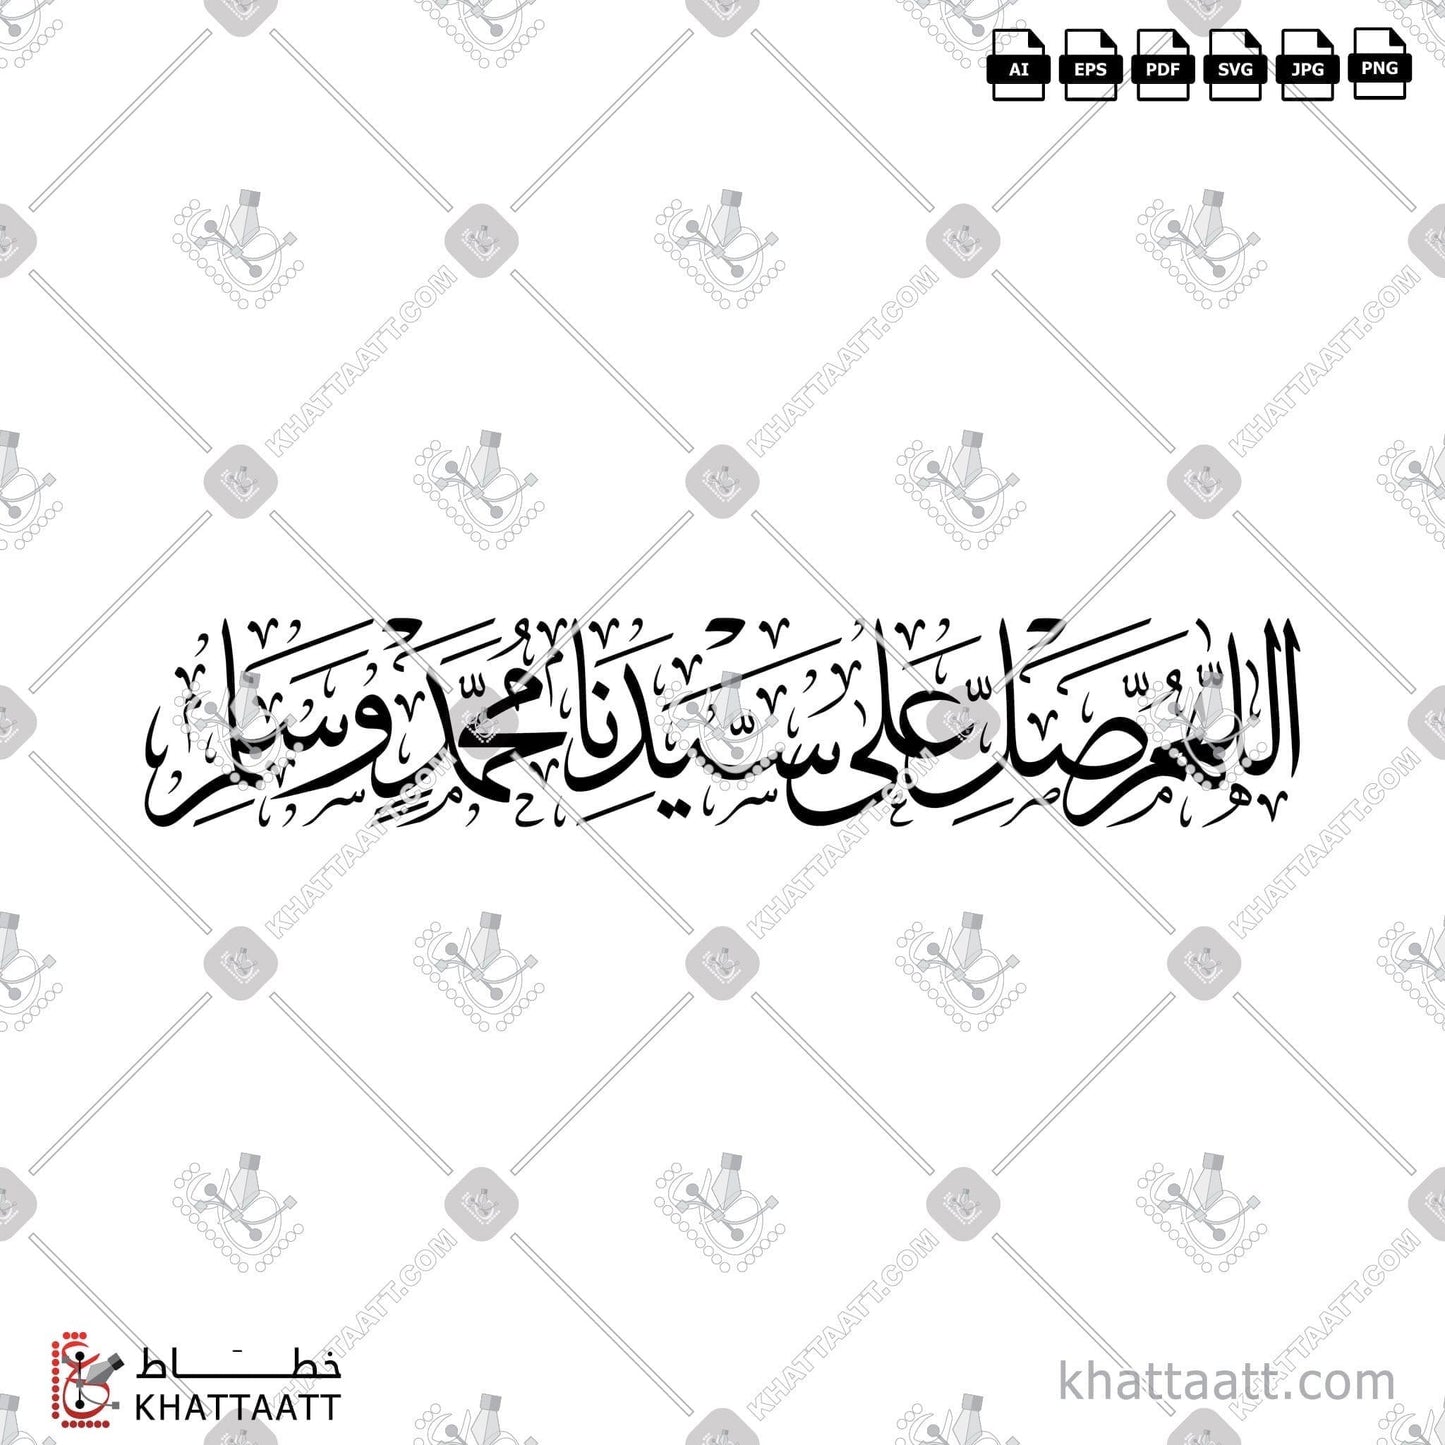 Download Arabic Calligraphy of اللهم صل على سيدنا محمد وسلم in Thuluth - خط الثلث in vector and .png